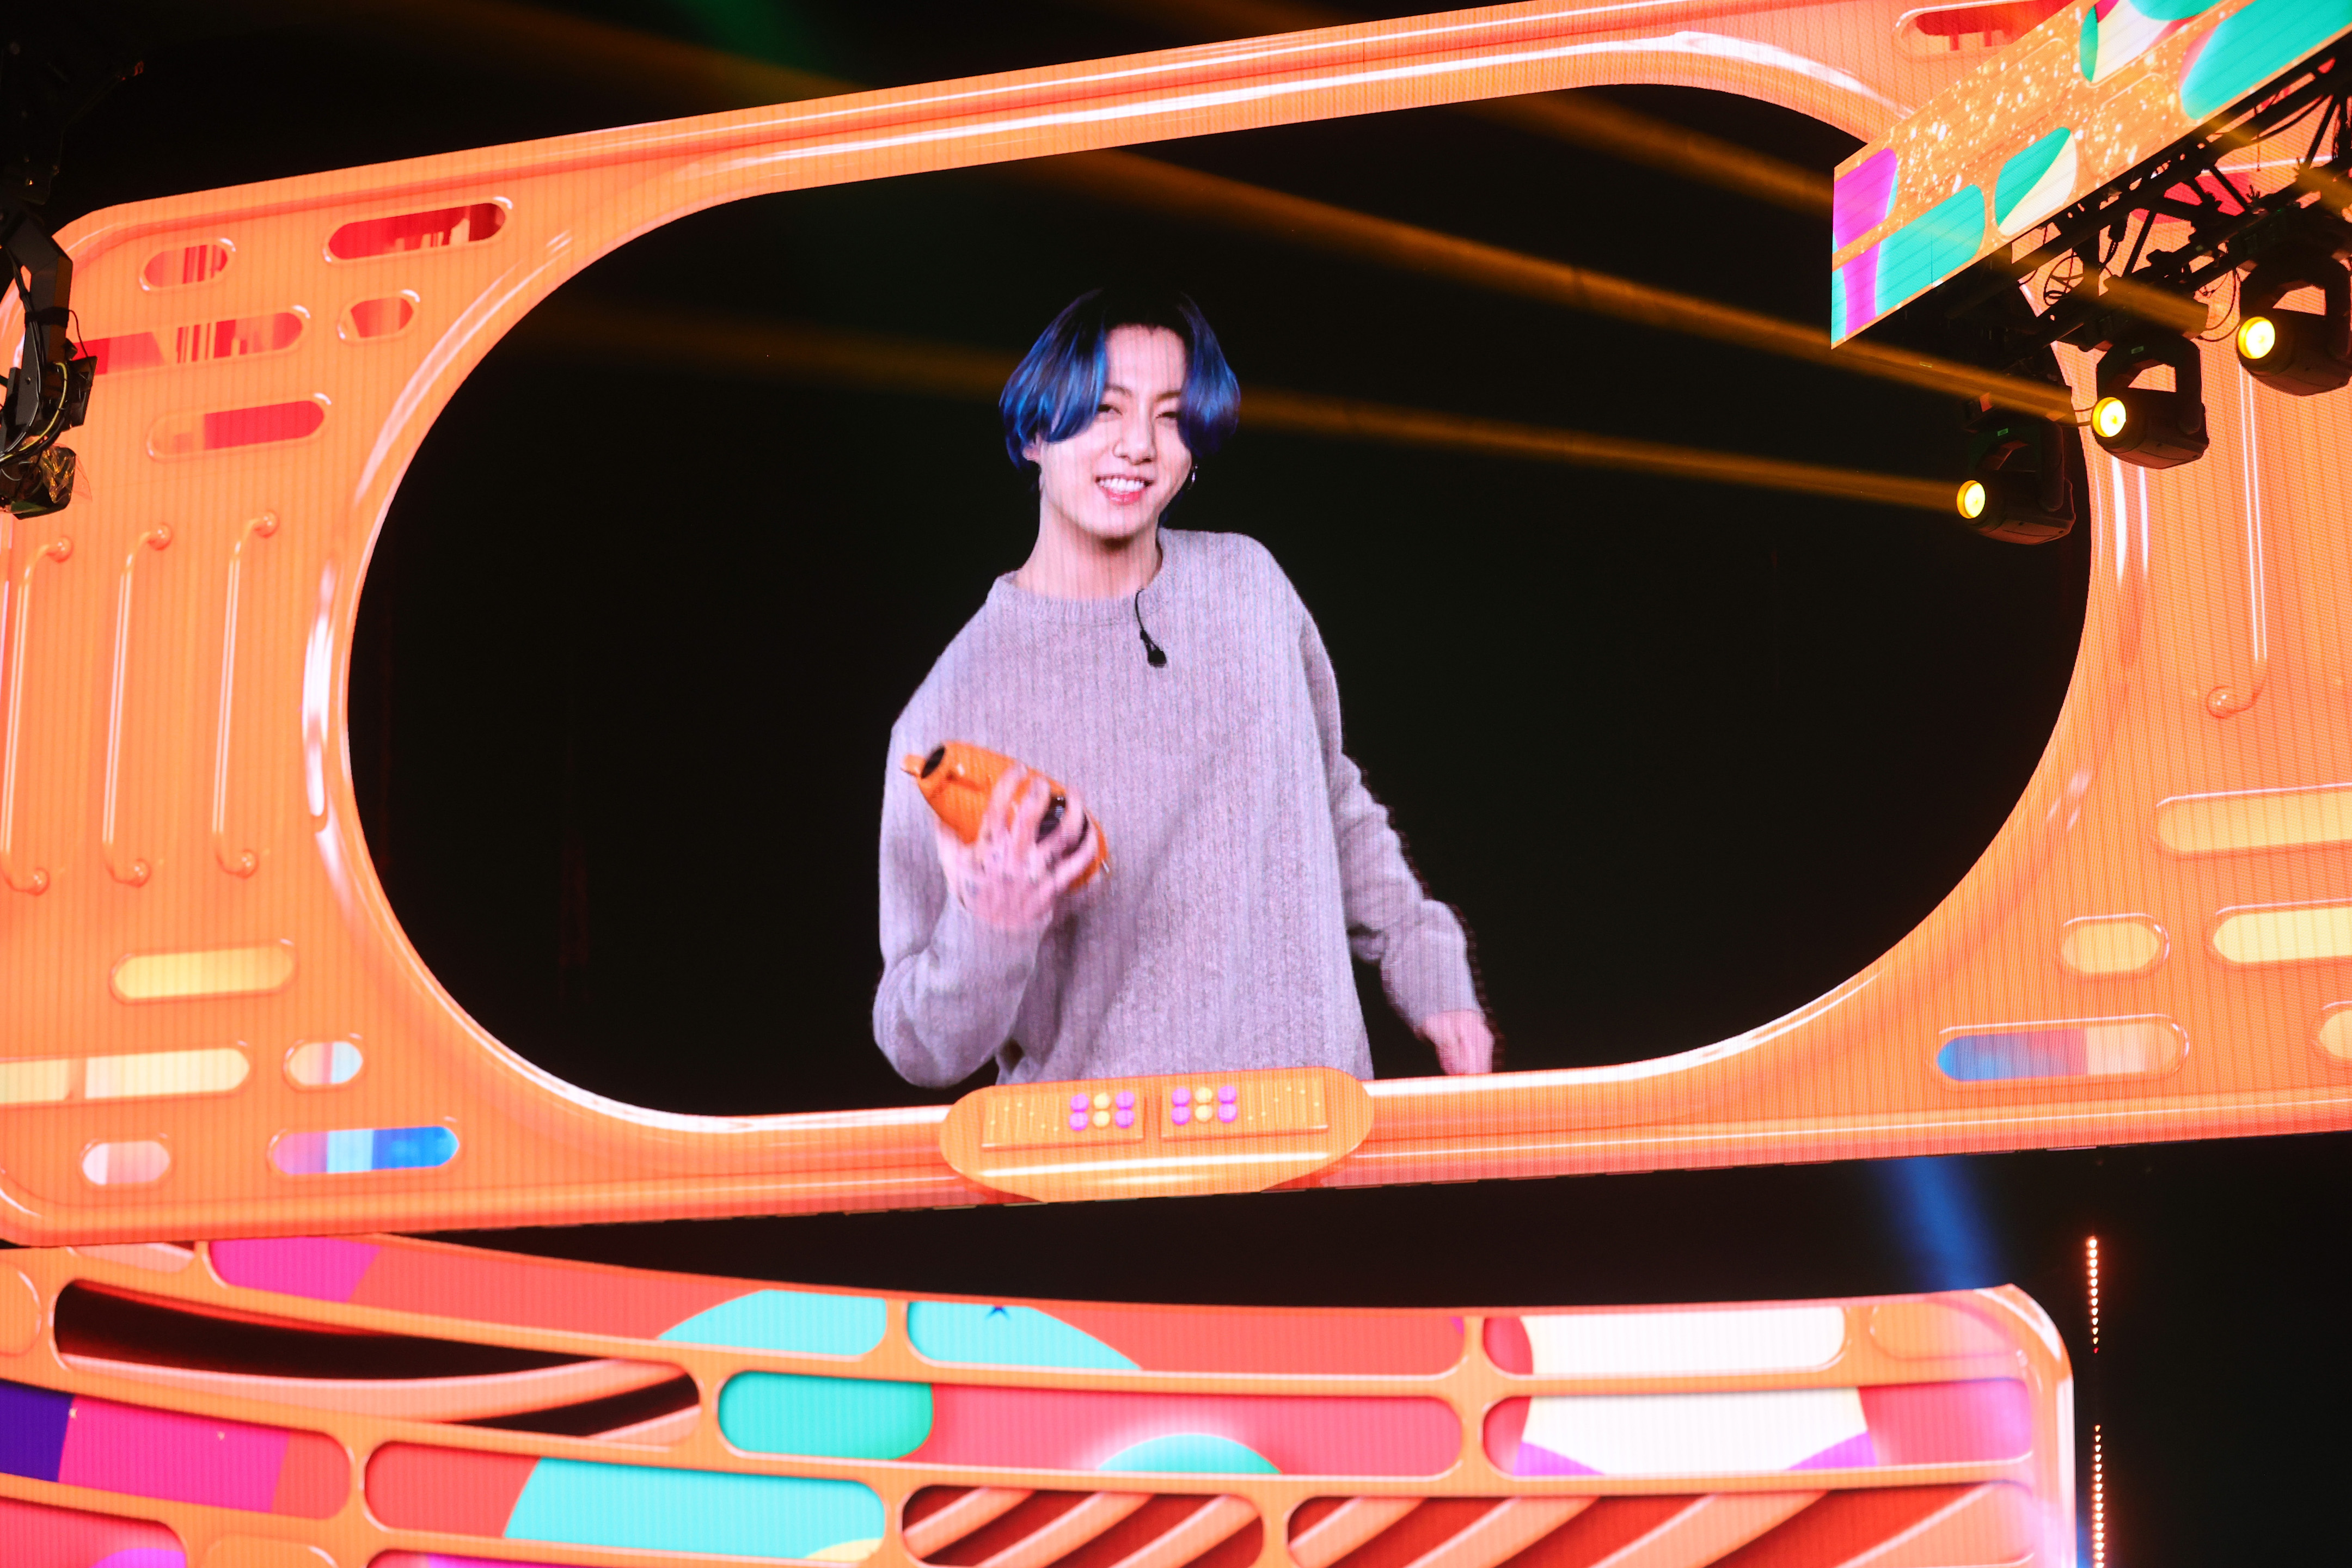 Jungkook of BTS, winner of Favorite Music Group, is seen curling his trophy during Nickleodeon's Kids' Choice Awards